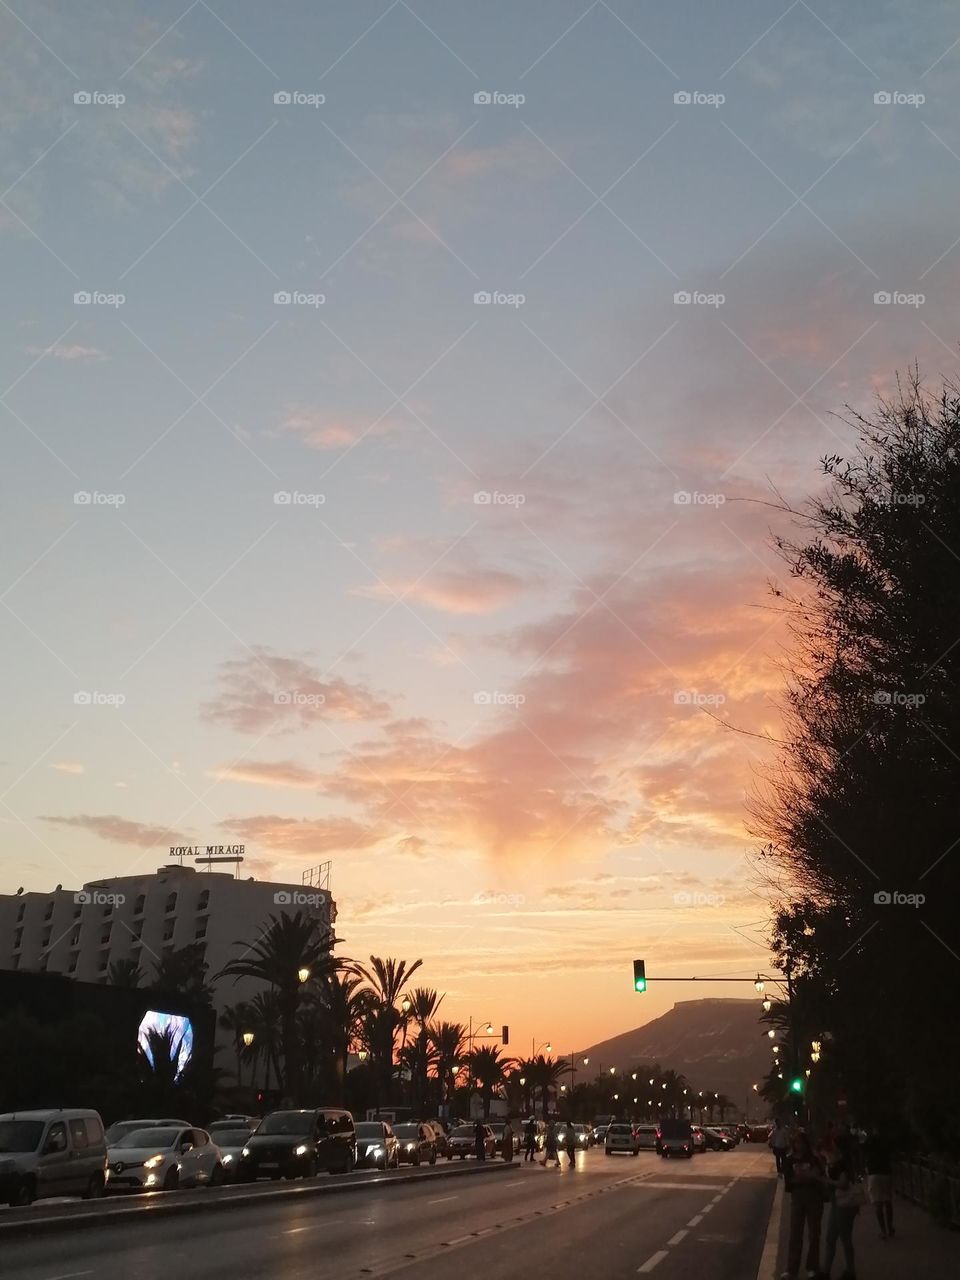 Sunset in Agadir, Morocco